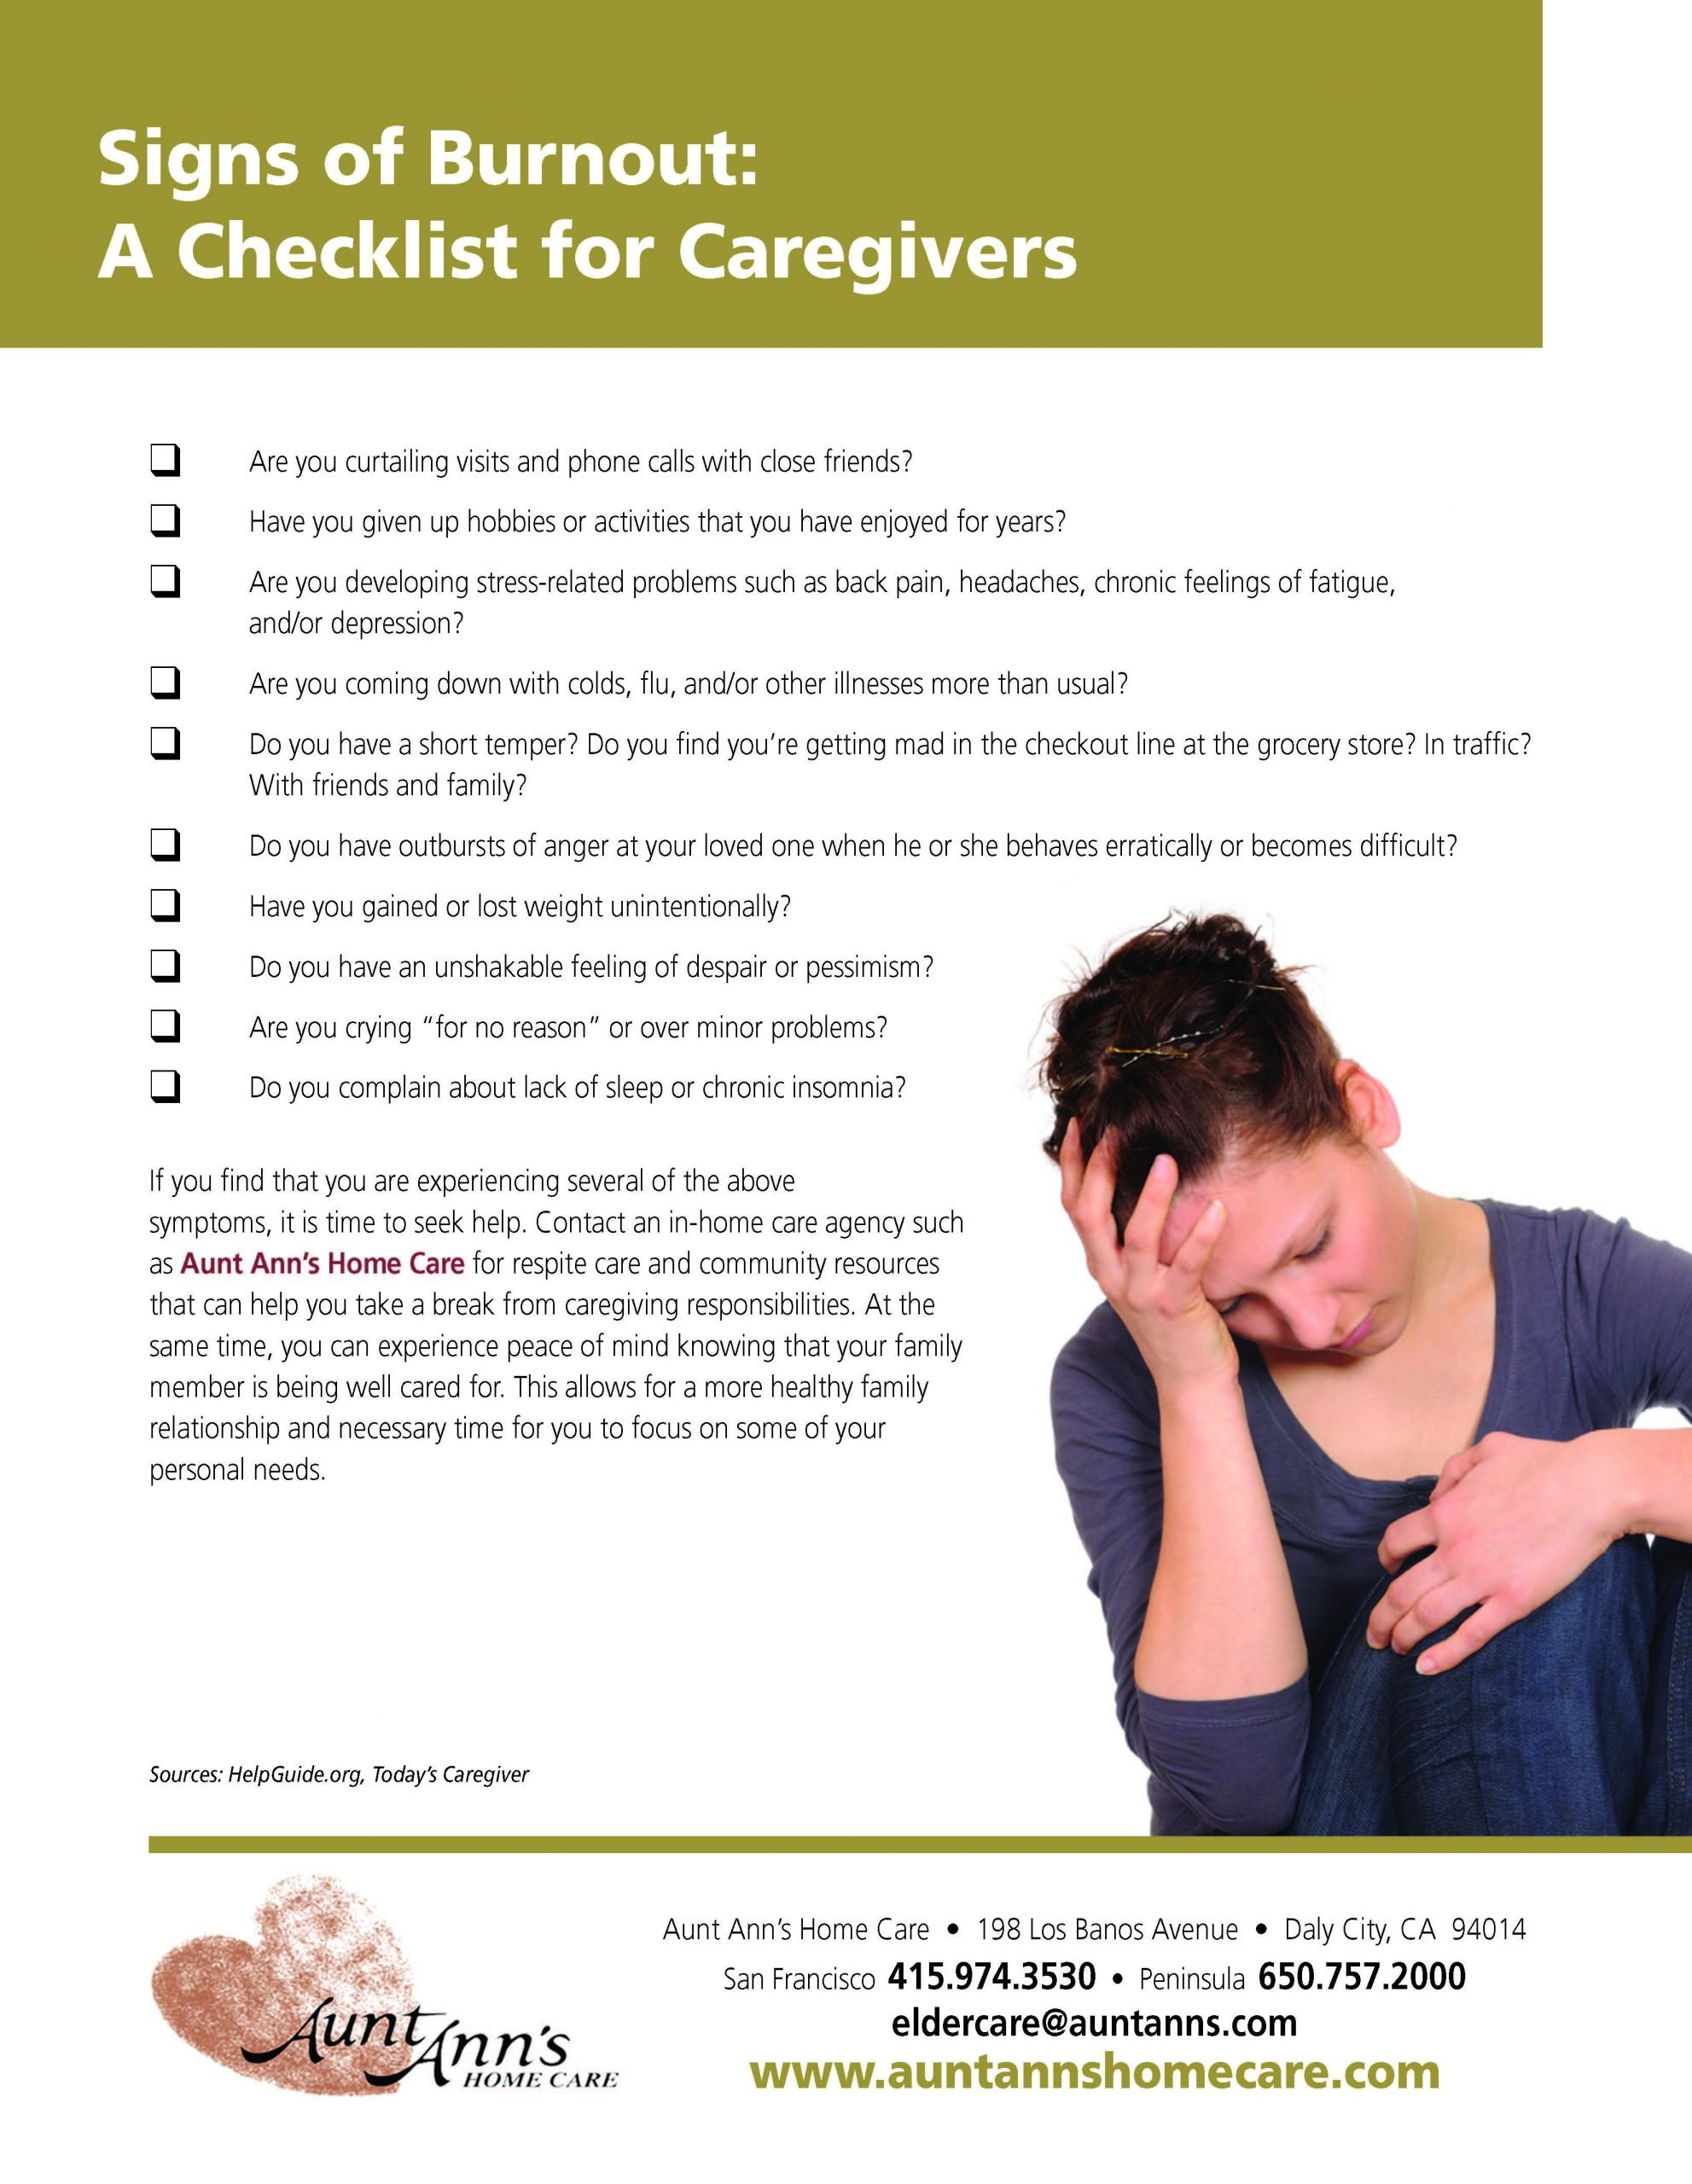 Signs of Caregiver Burnout